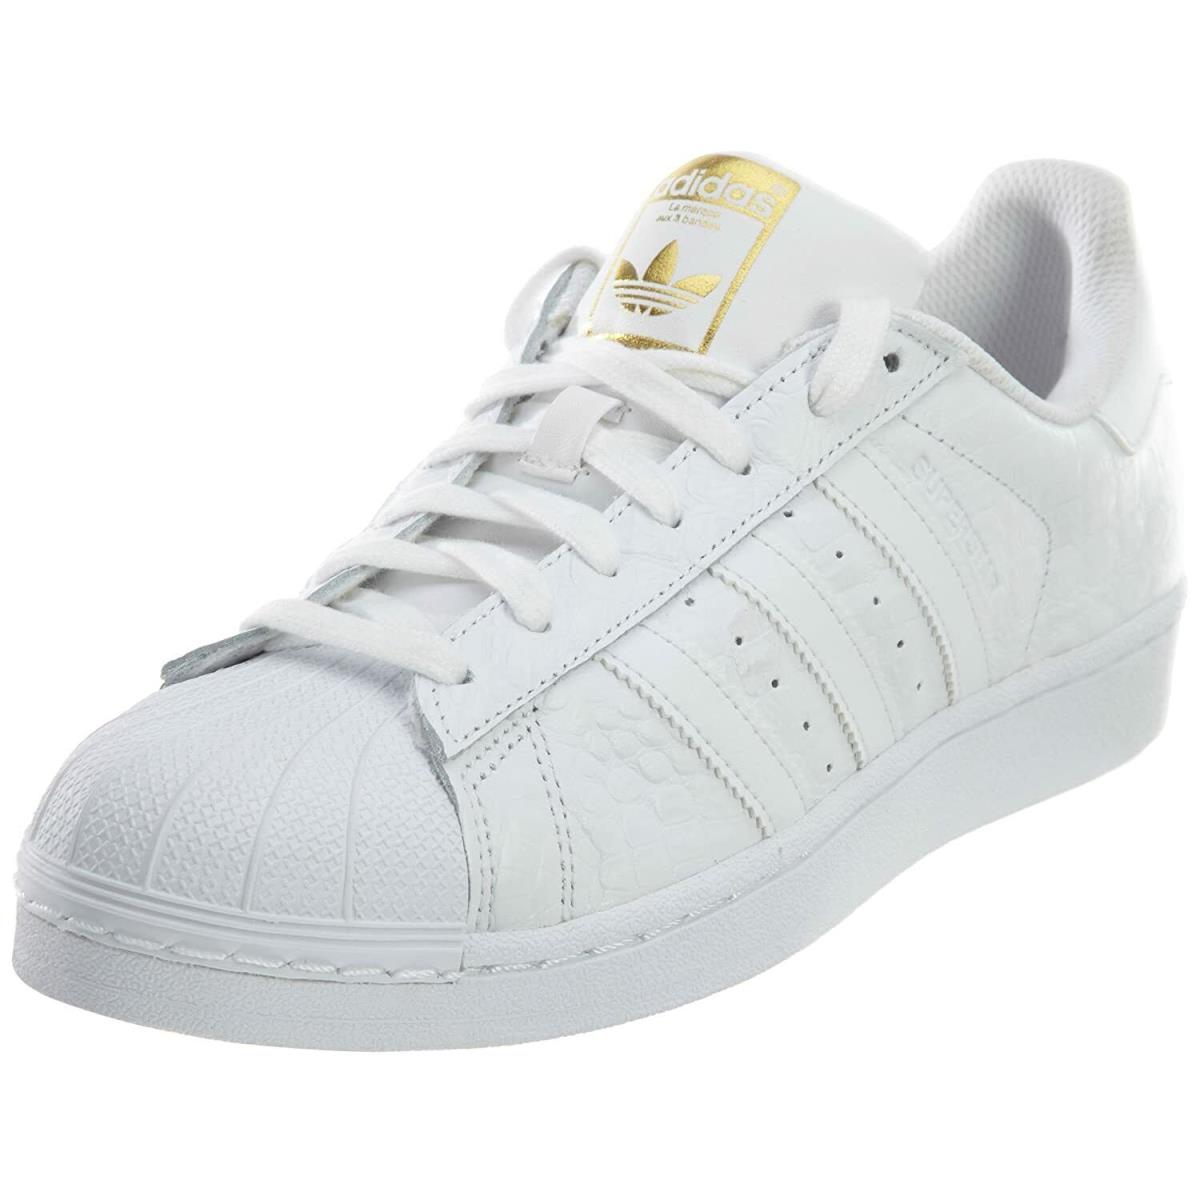 Adidas shoes Originals Superstar Croc - White 8